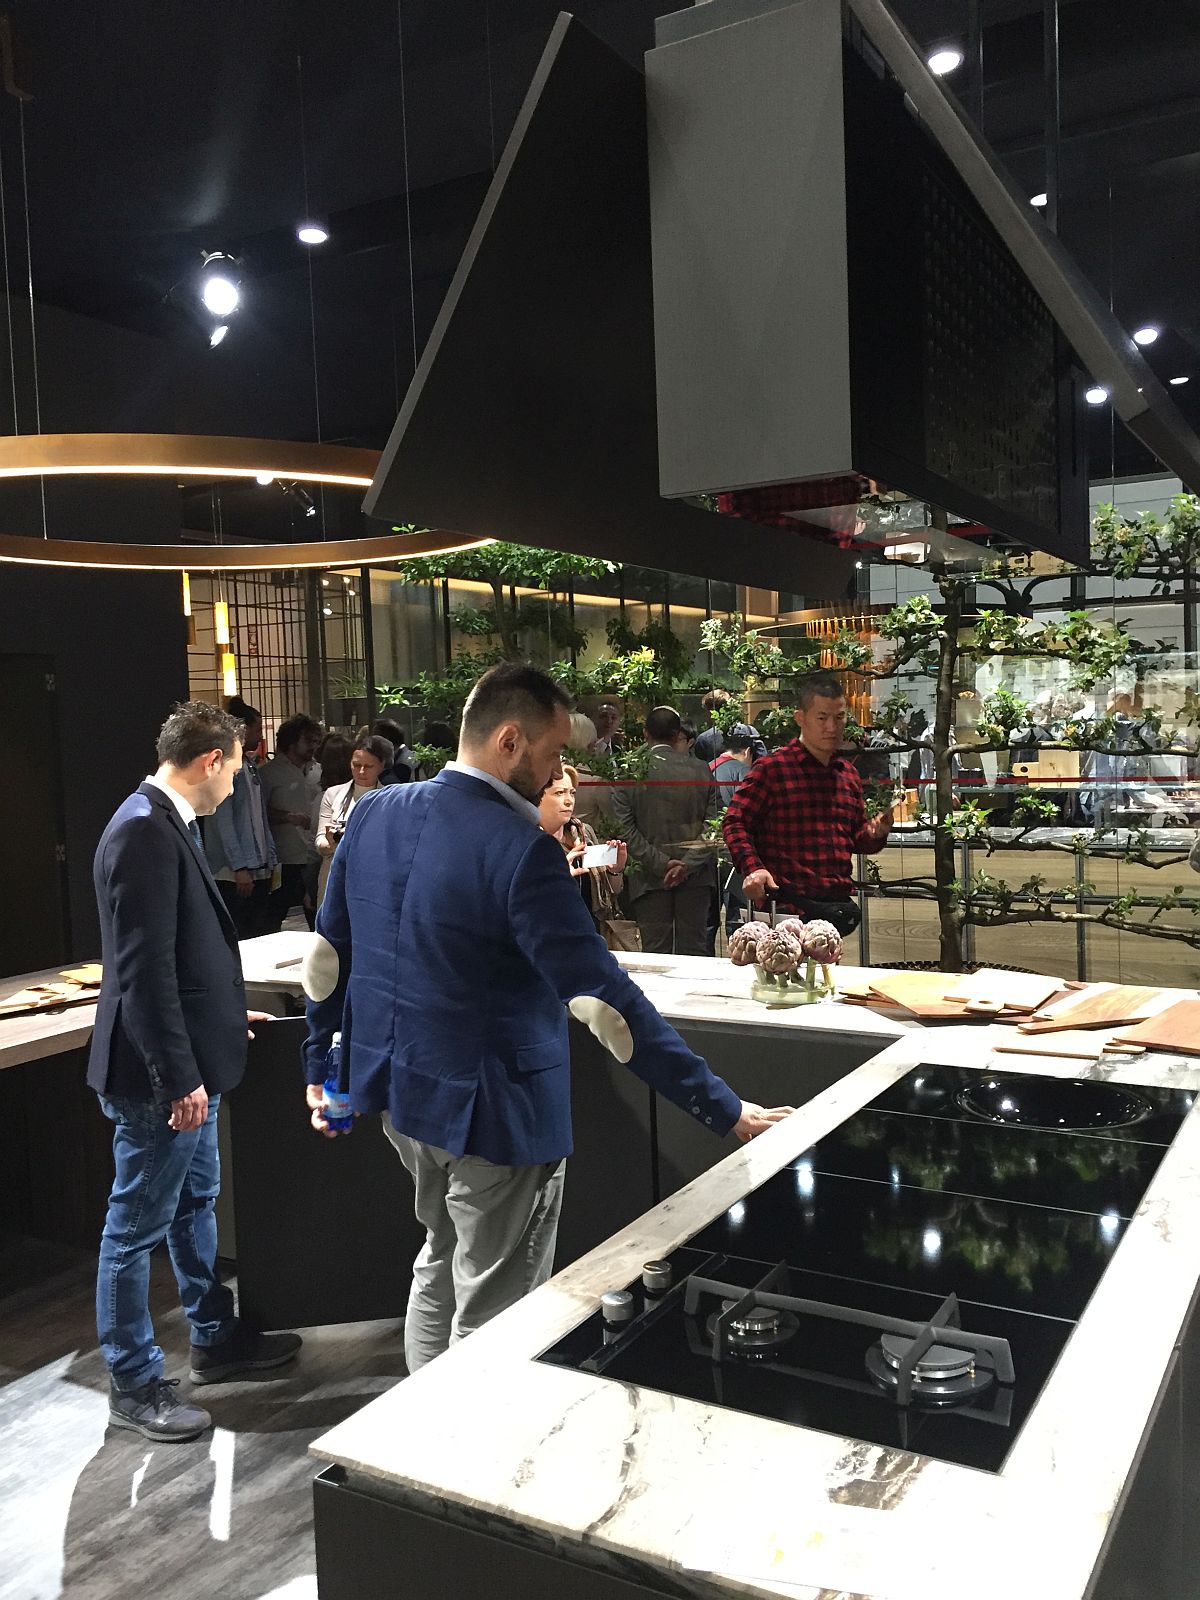 Marble kitchen countertops make a big splash at EuroCucina 2016